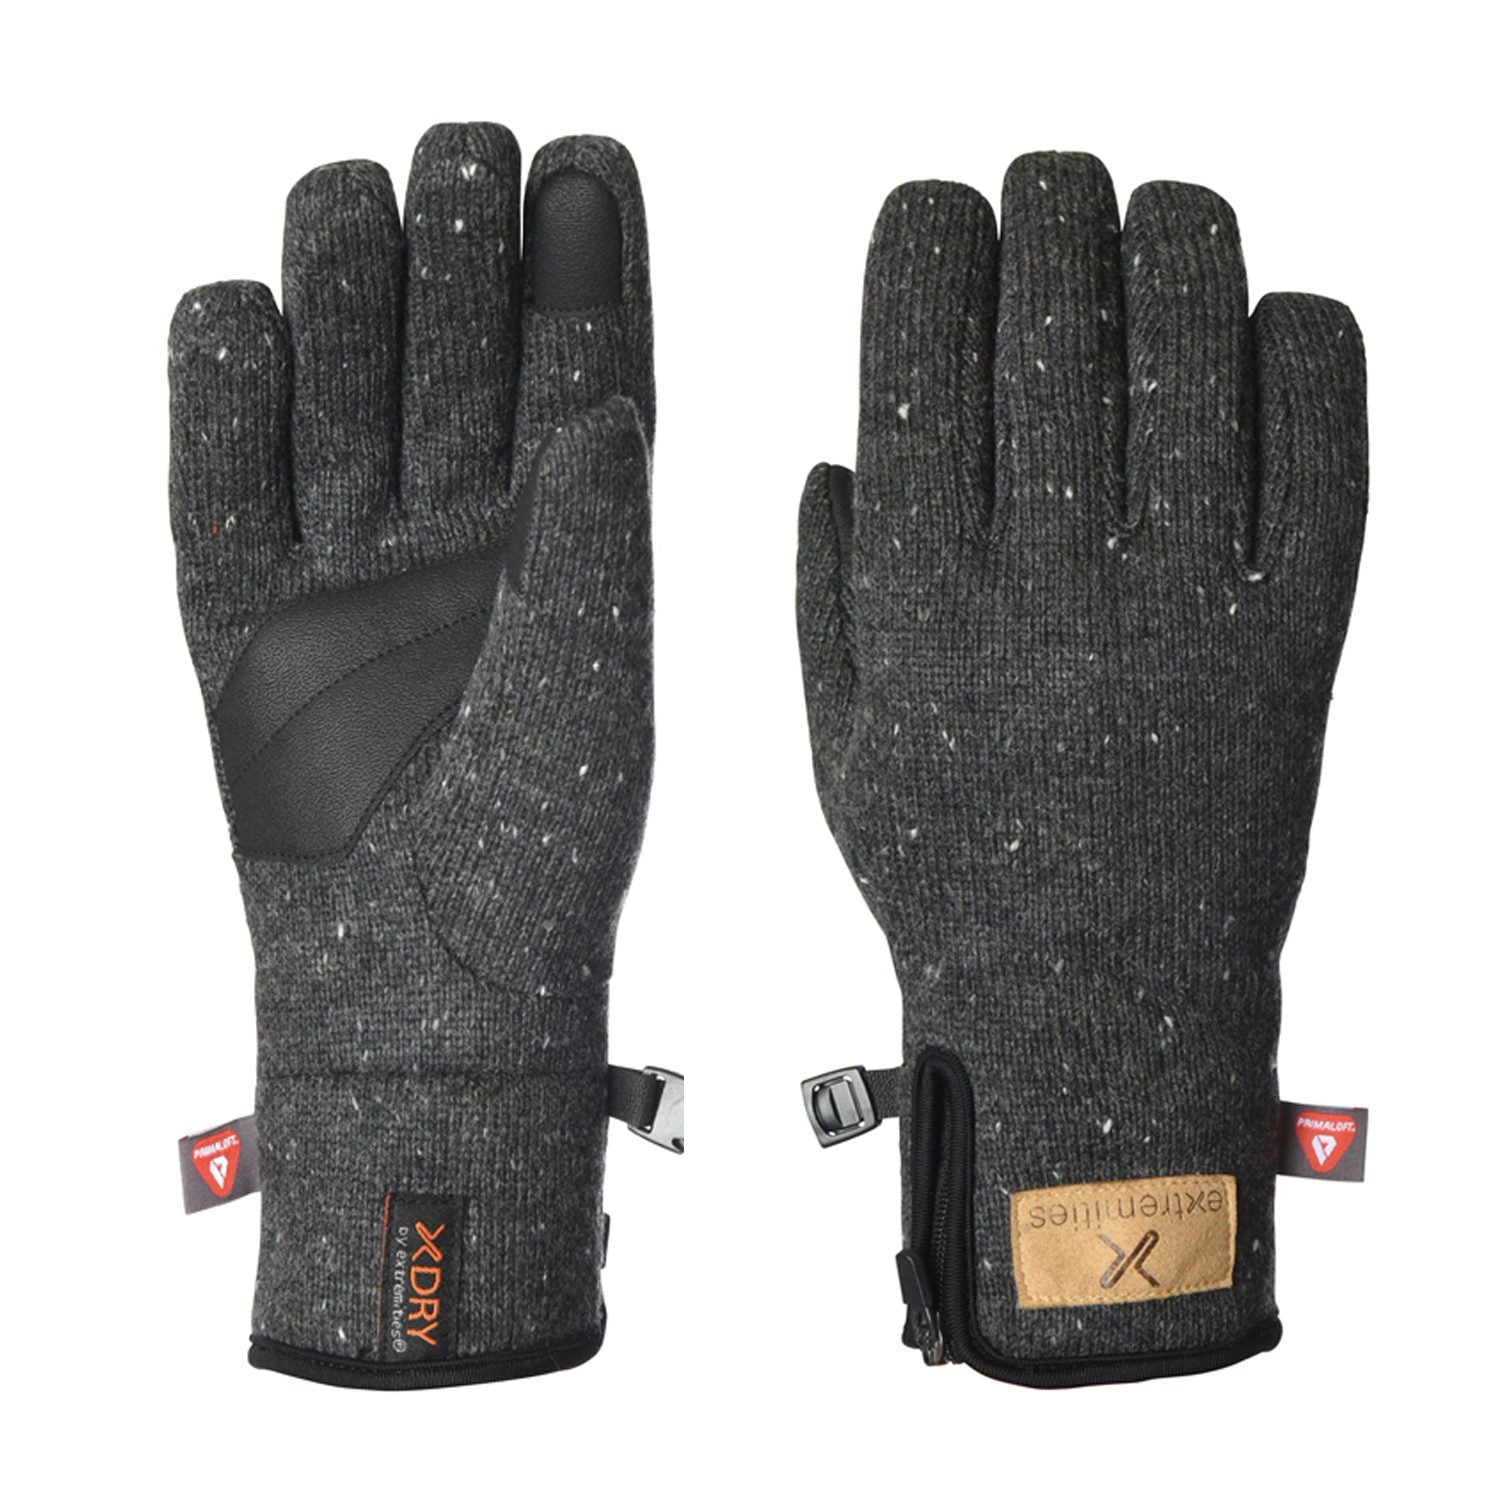 Furnace Pro Gloves - GREY MARL